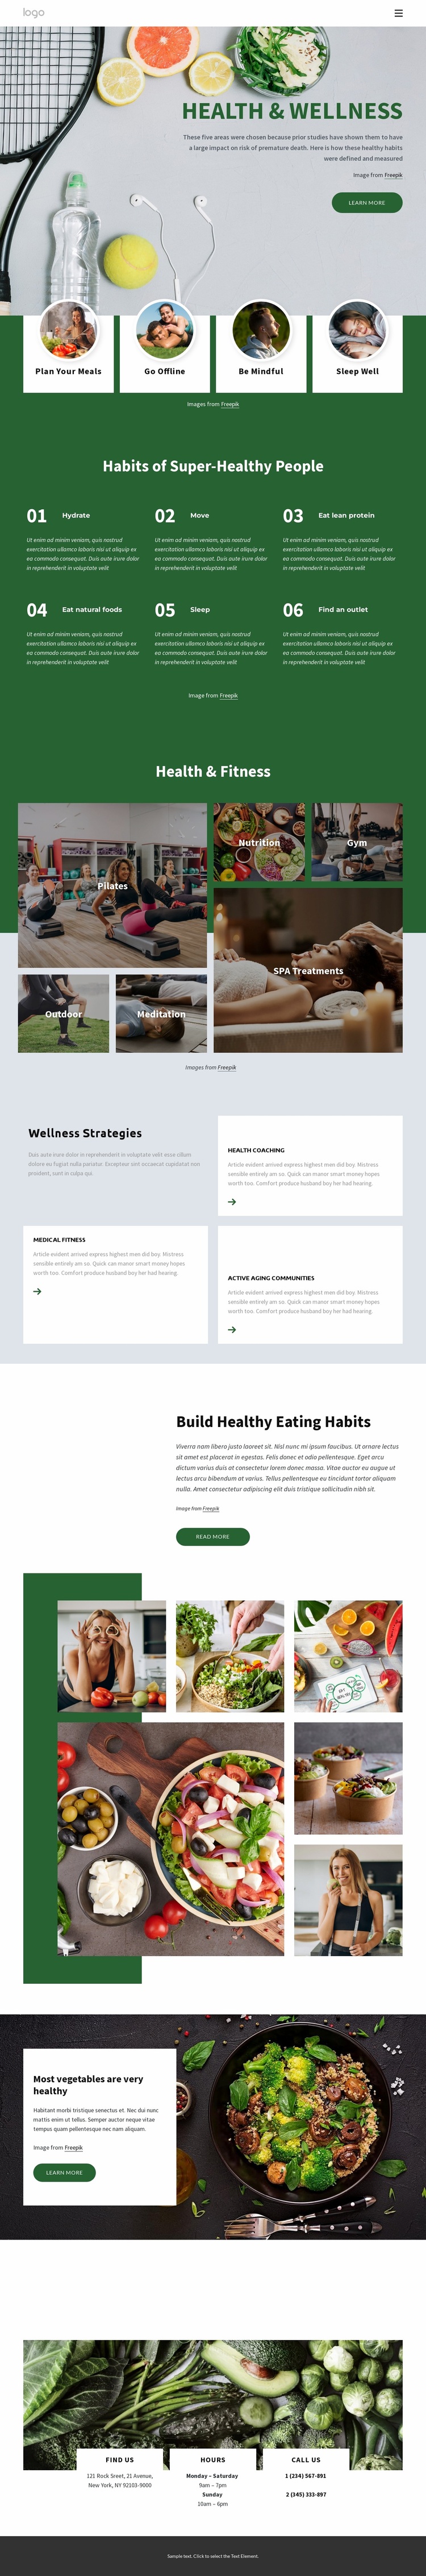 Health and wellness center Website Design